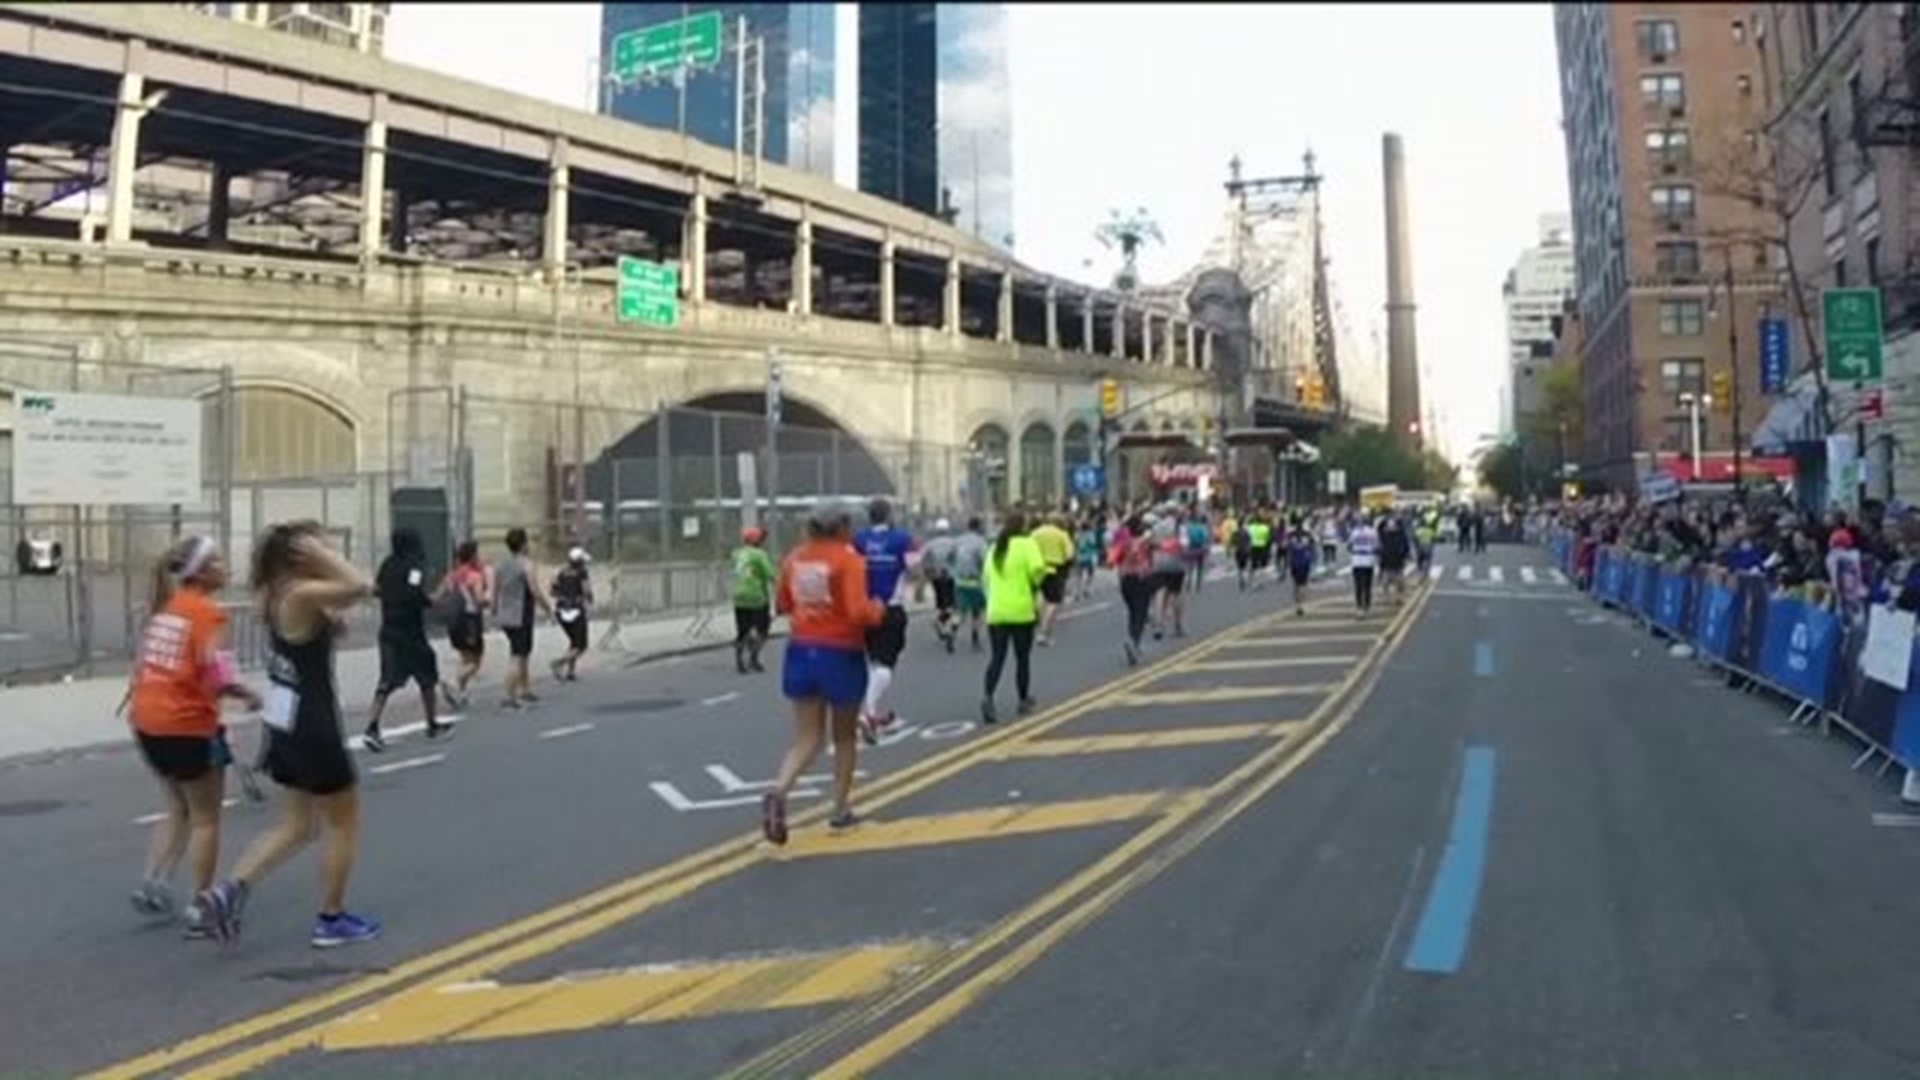 Behind the Scenes of the TCS NYC Marathon